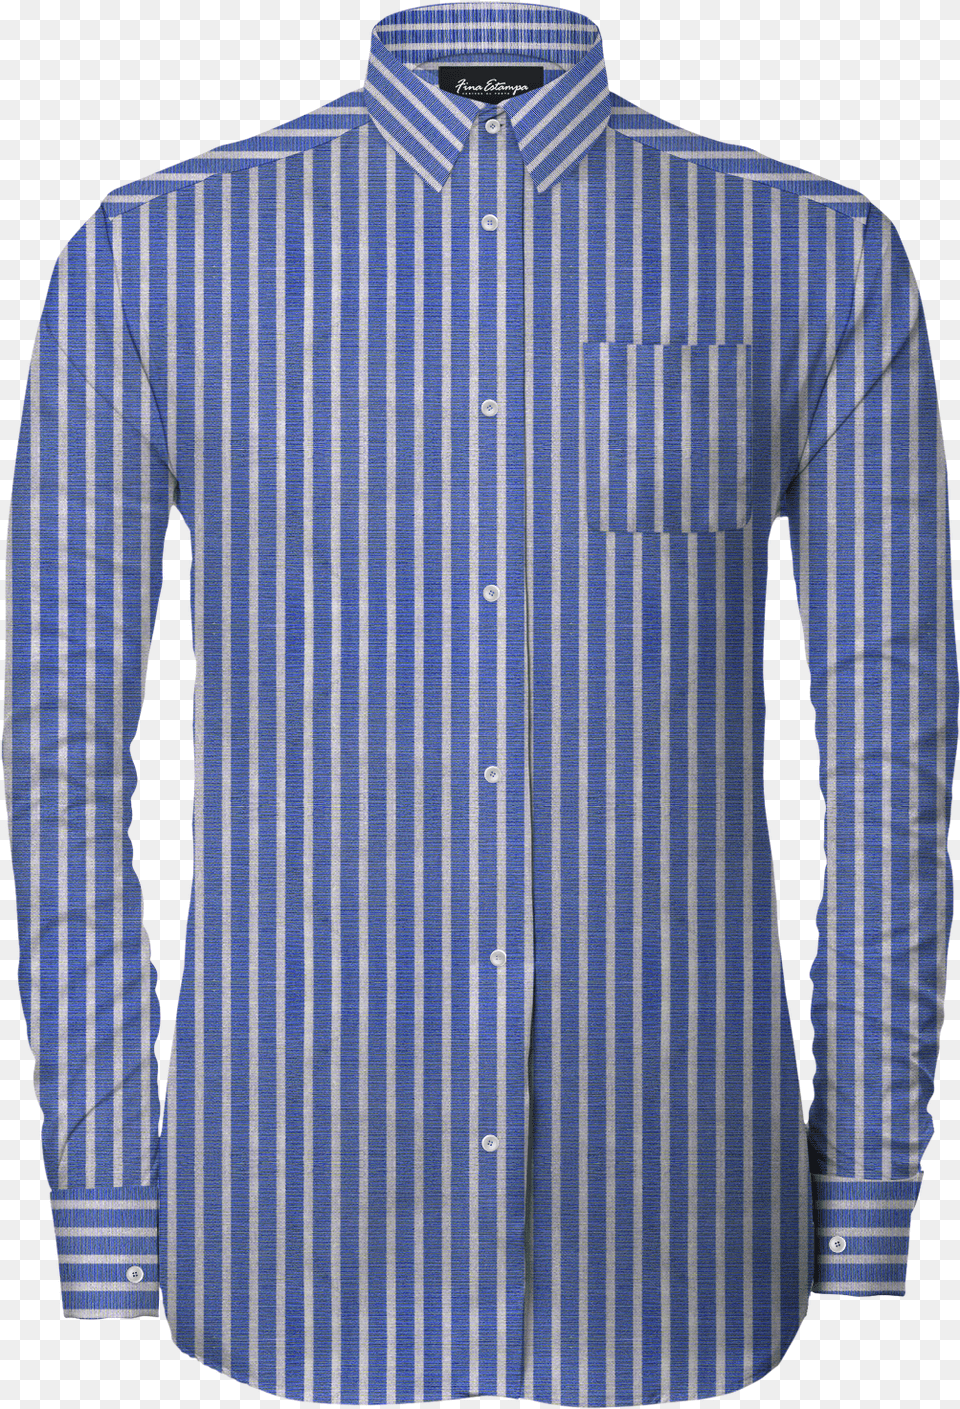 Navy Blue Stripes, Clothing, Dress Shirt, Long Sleeve, Shirt Png Image